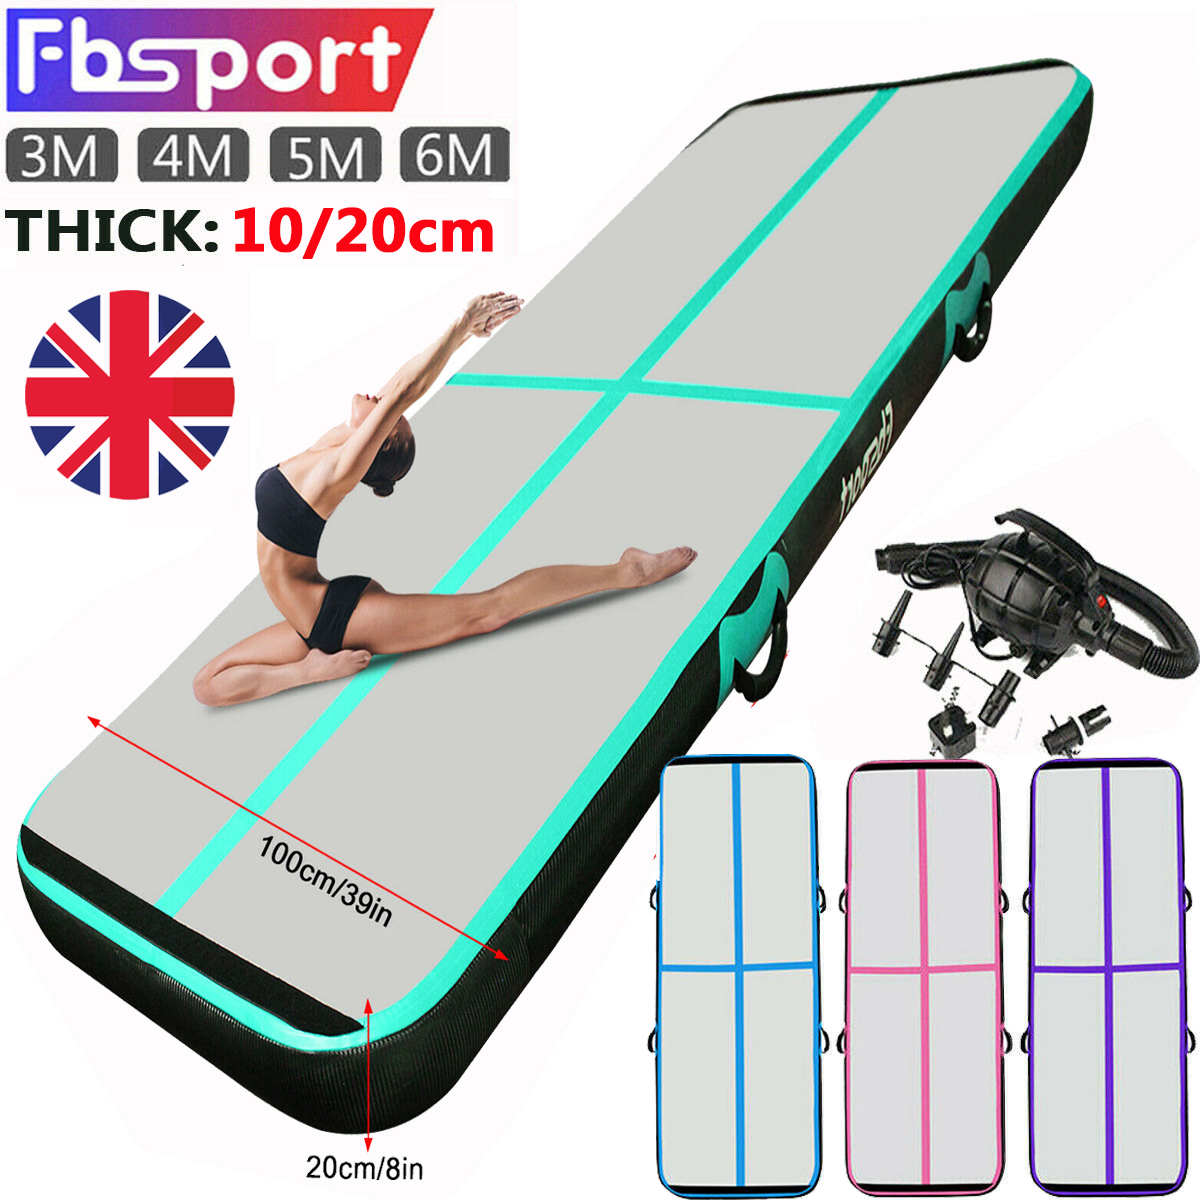 4m 5m 6m Airtrack Inflatable Air Track Gymnastics Tumbling ...